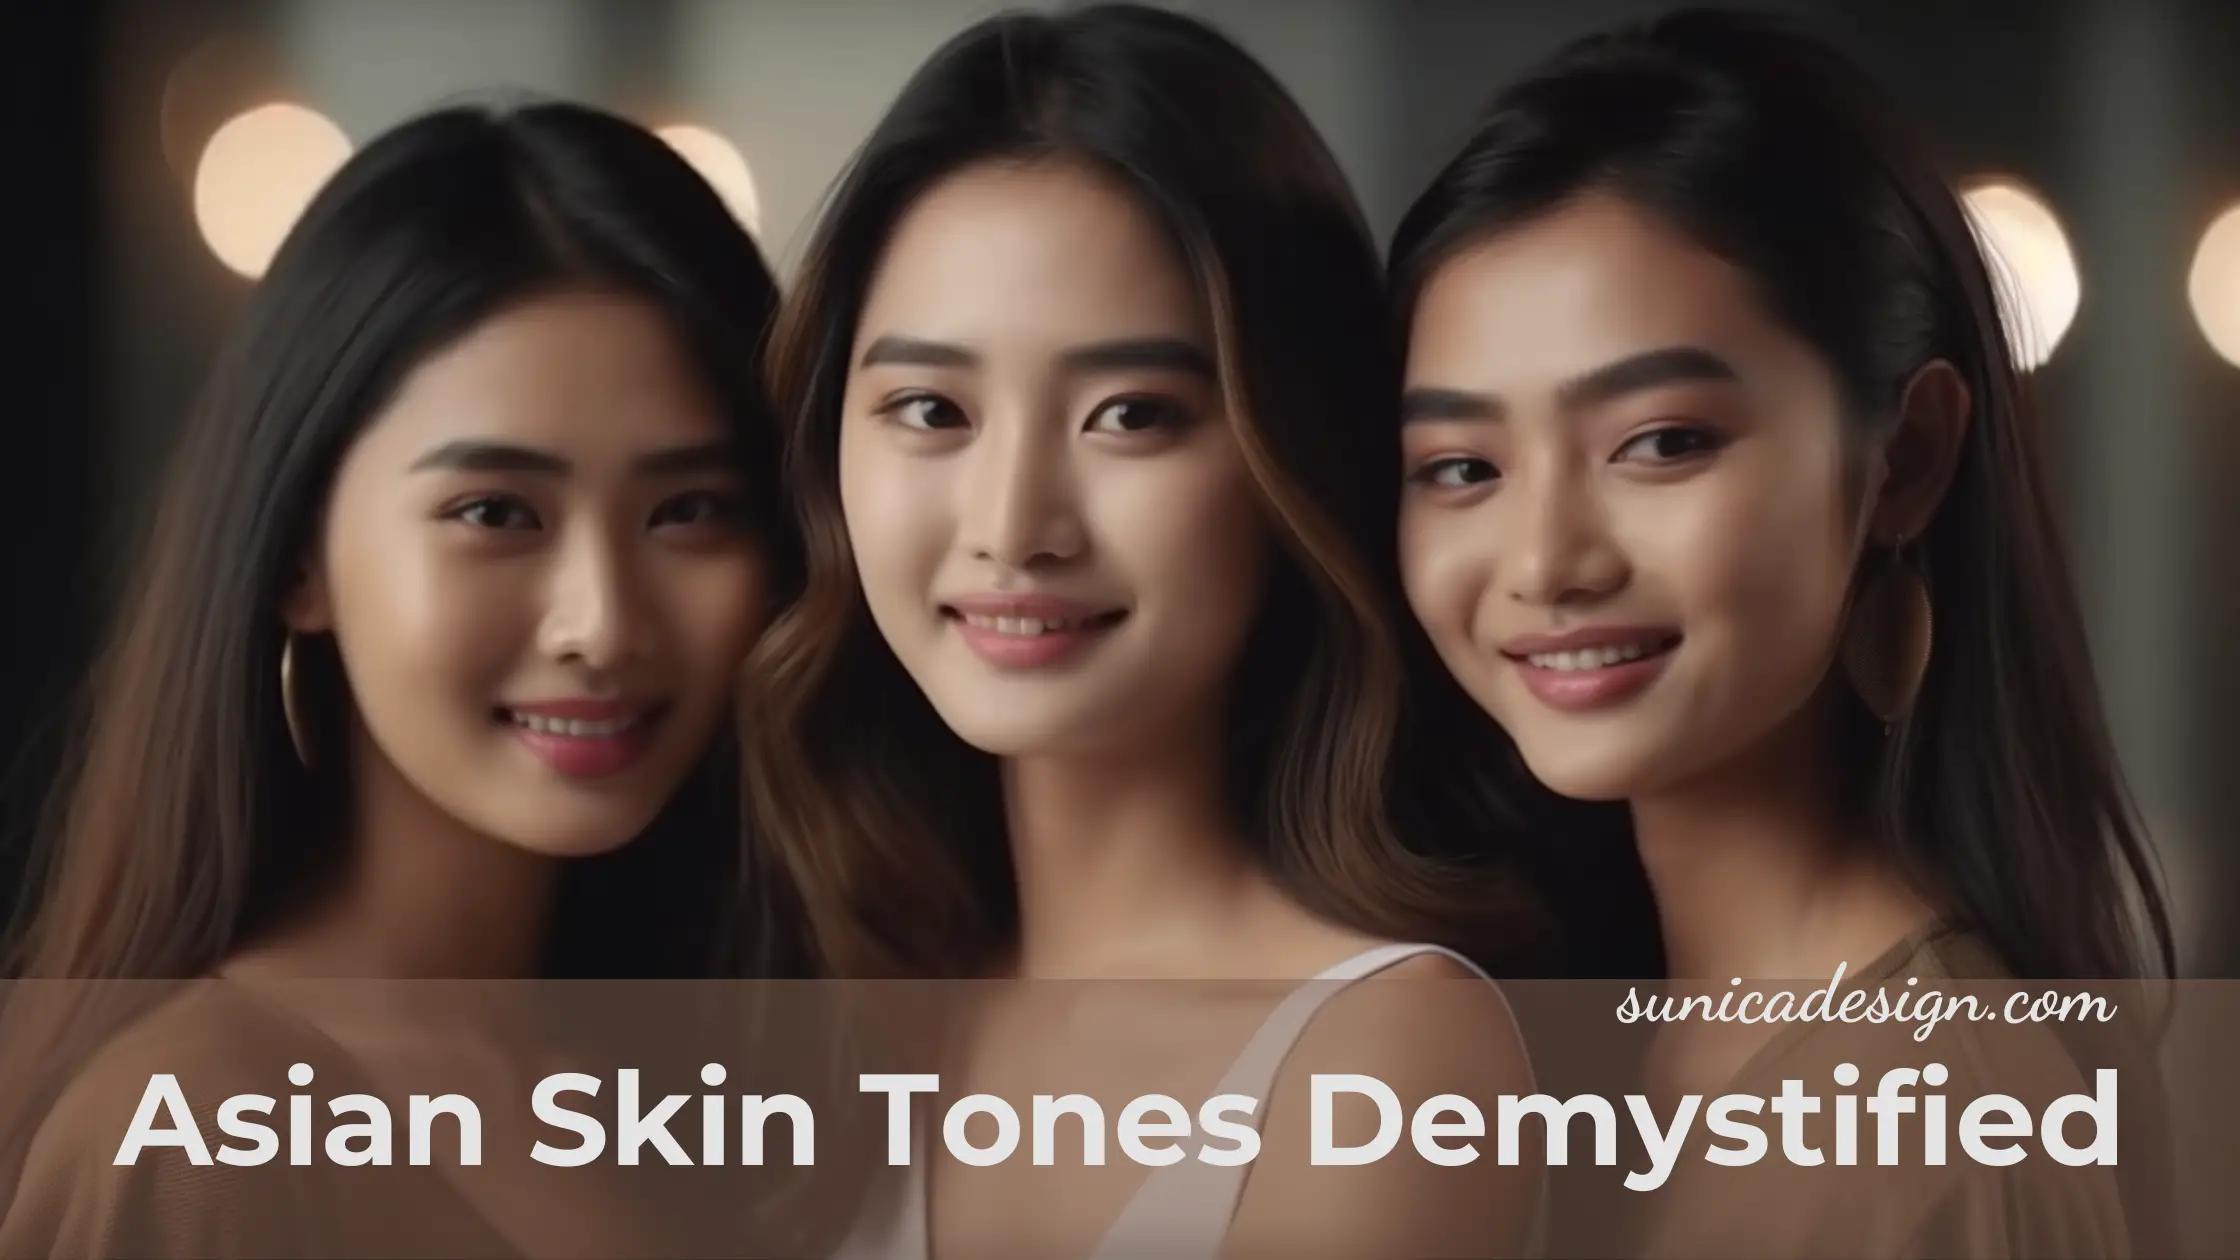 The Genetics Of Skin Type: Stylish.ae Delves Deep